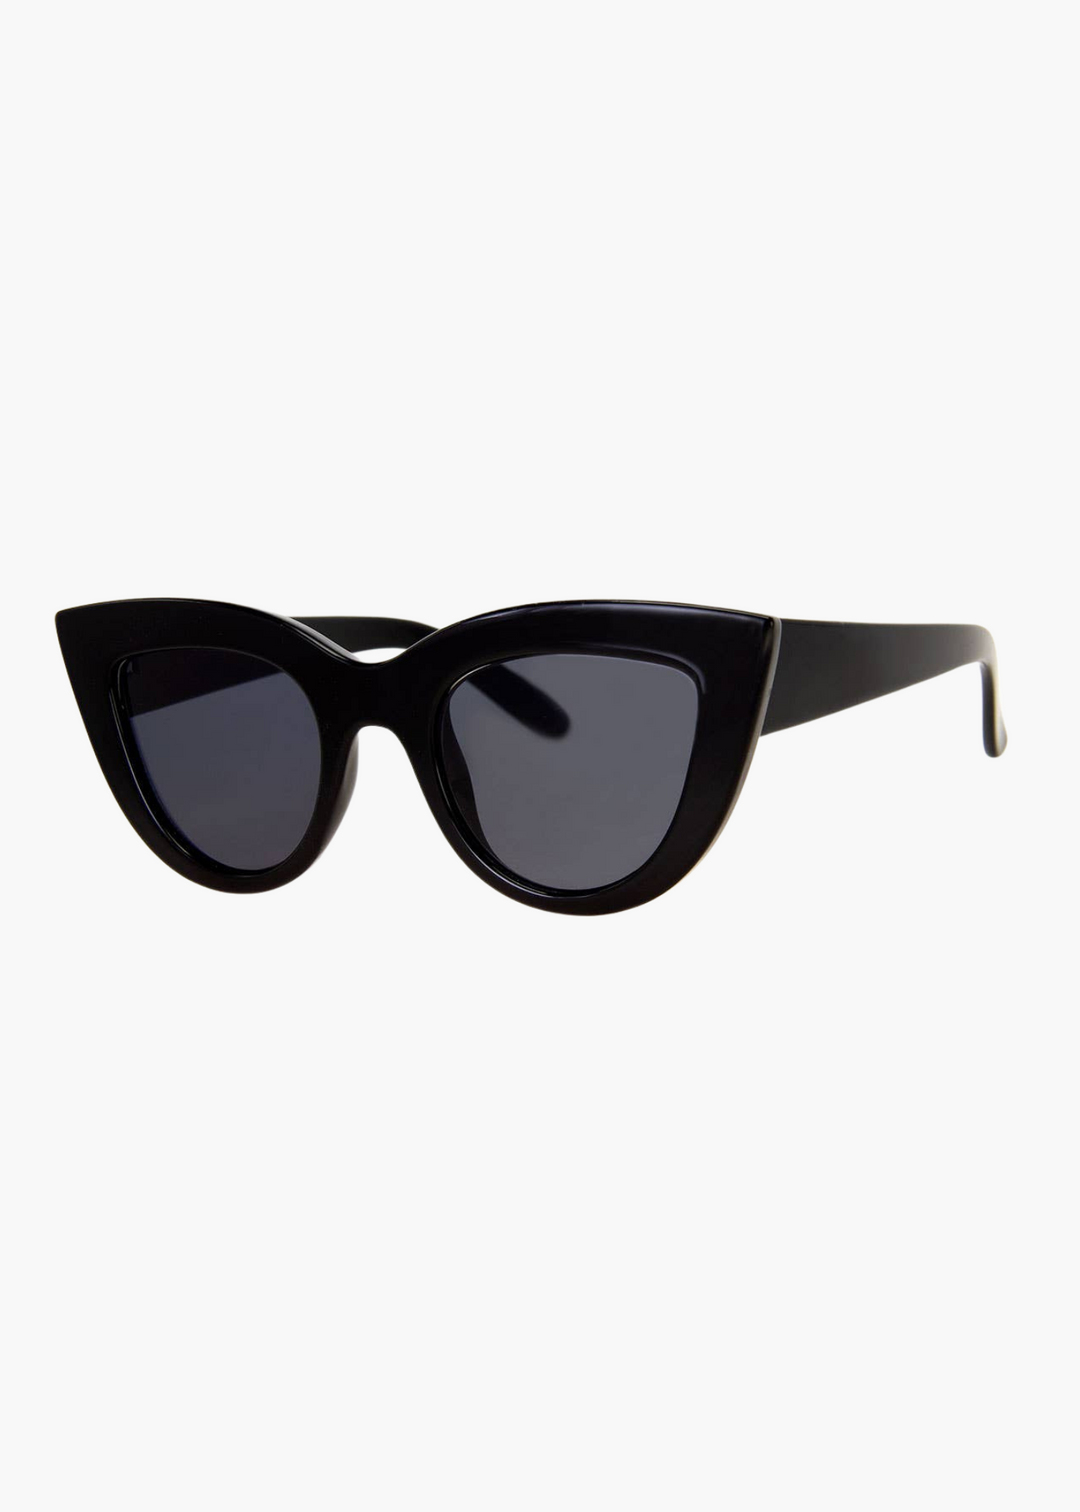 Vintage Inspired Cat Eye Sunglasses in Black